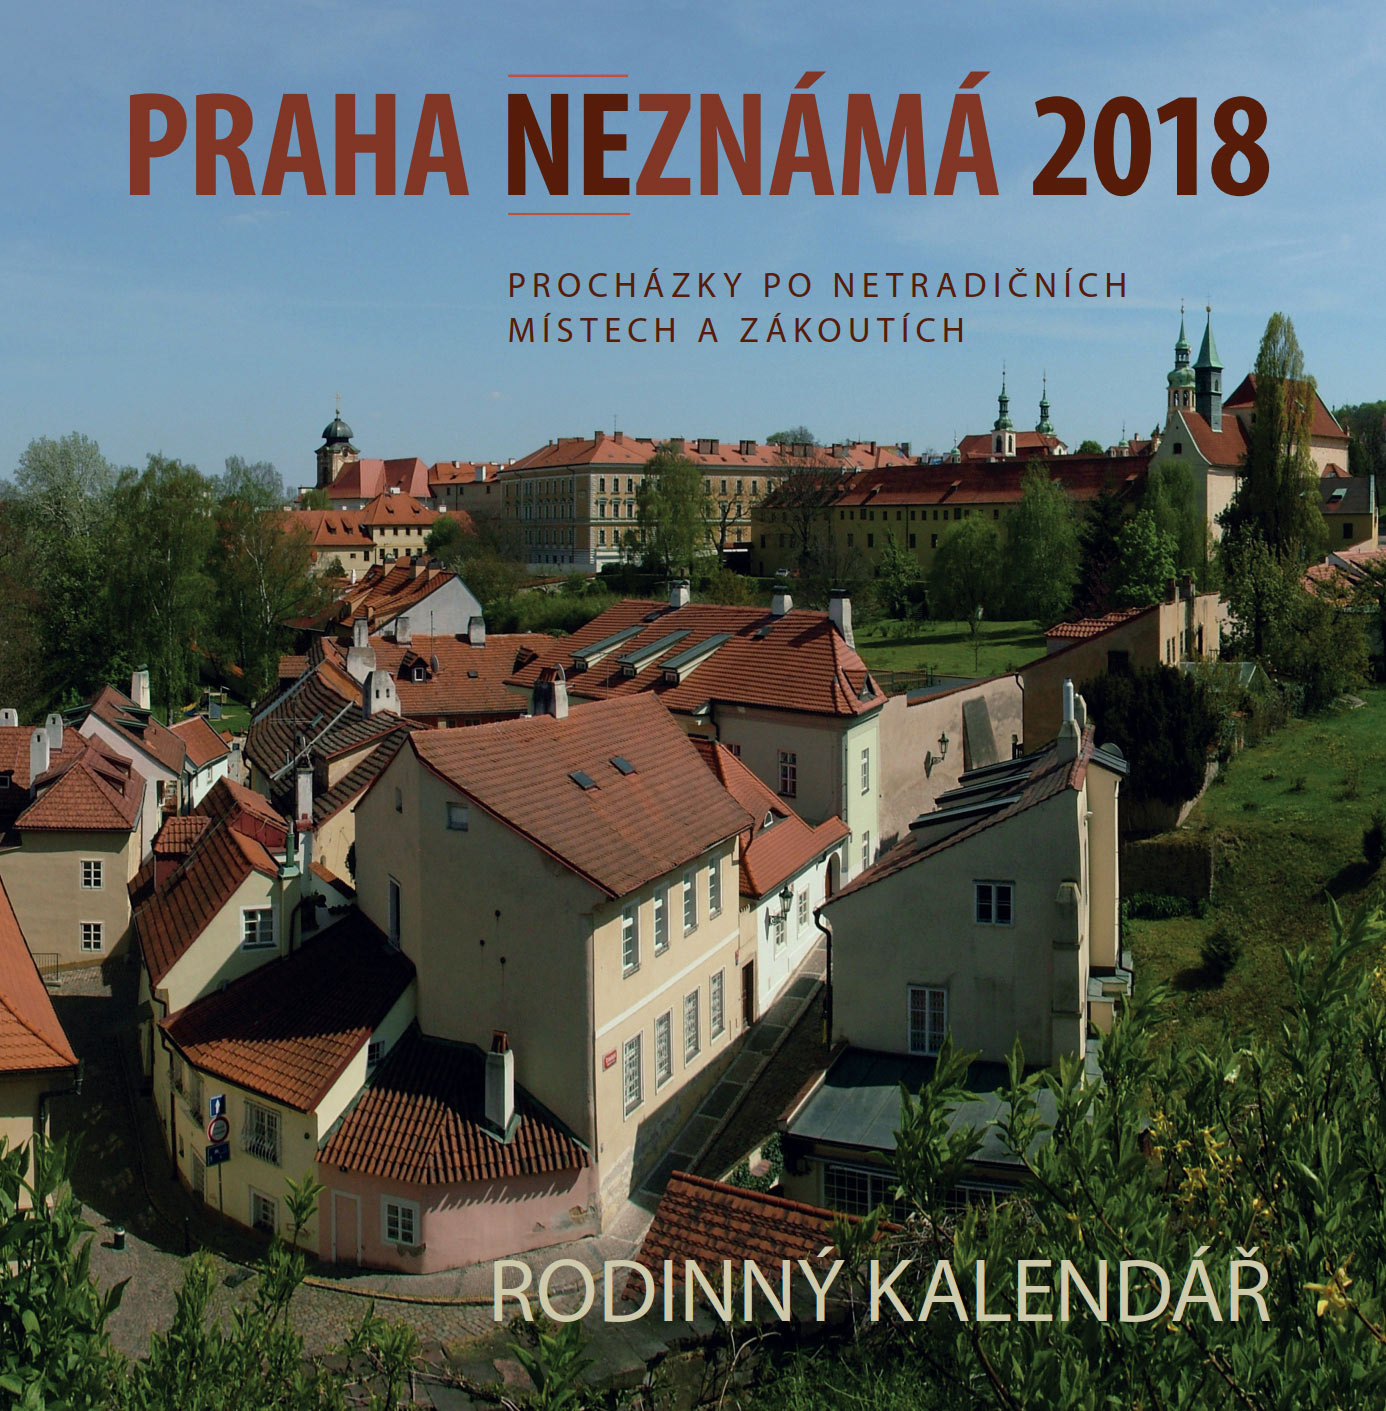 Praha Neznámá má kalendář!